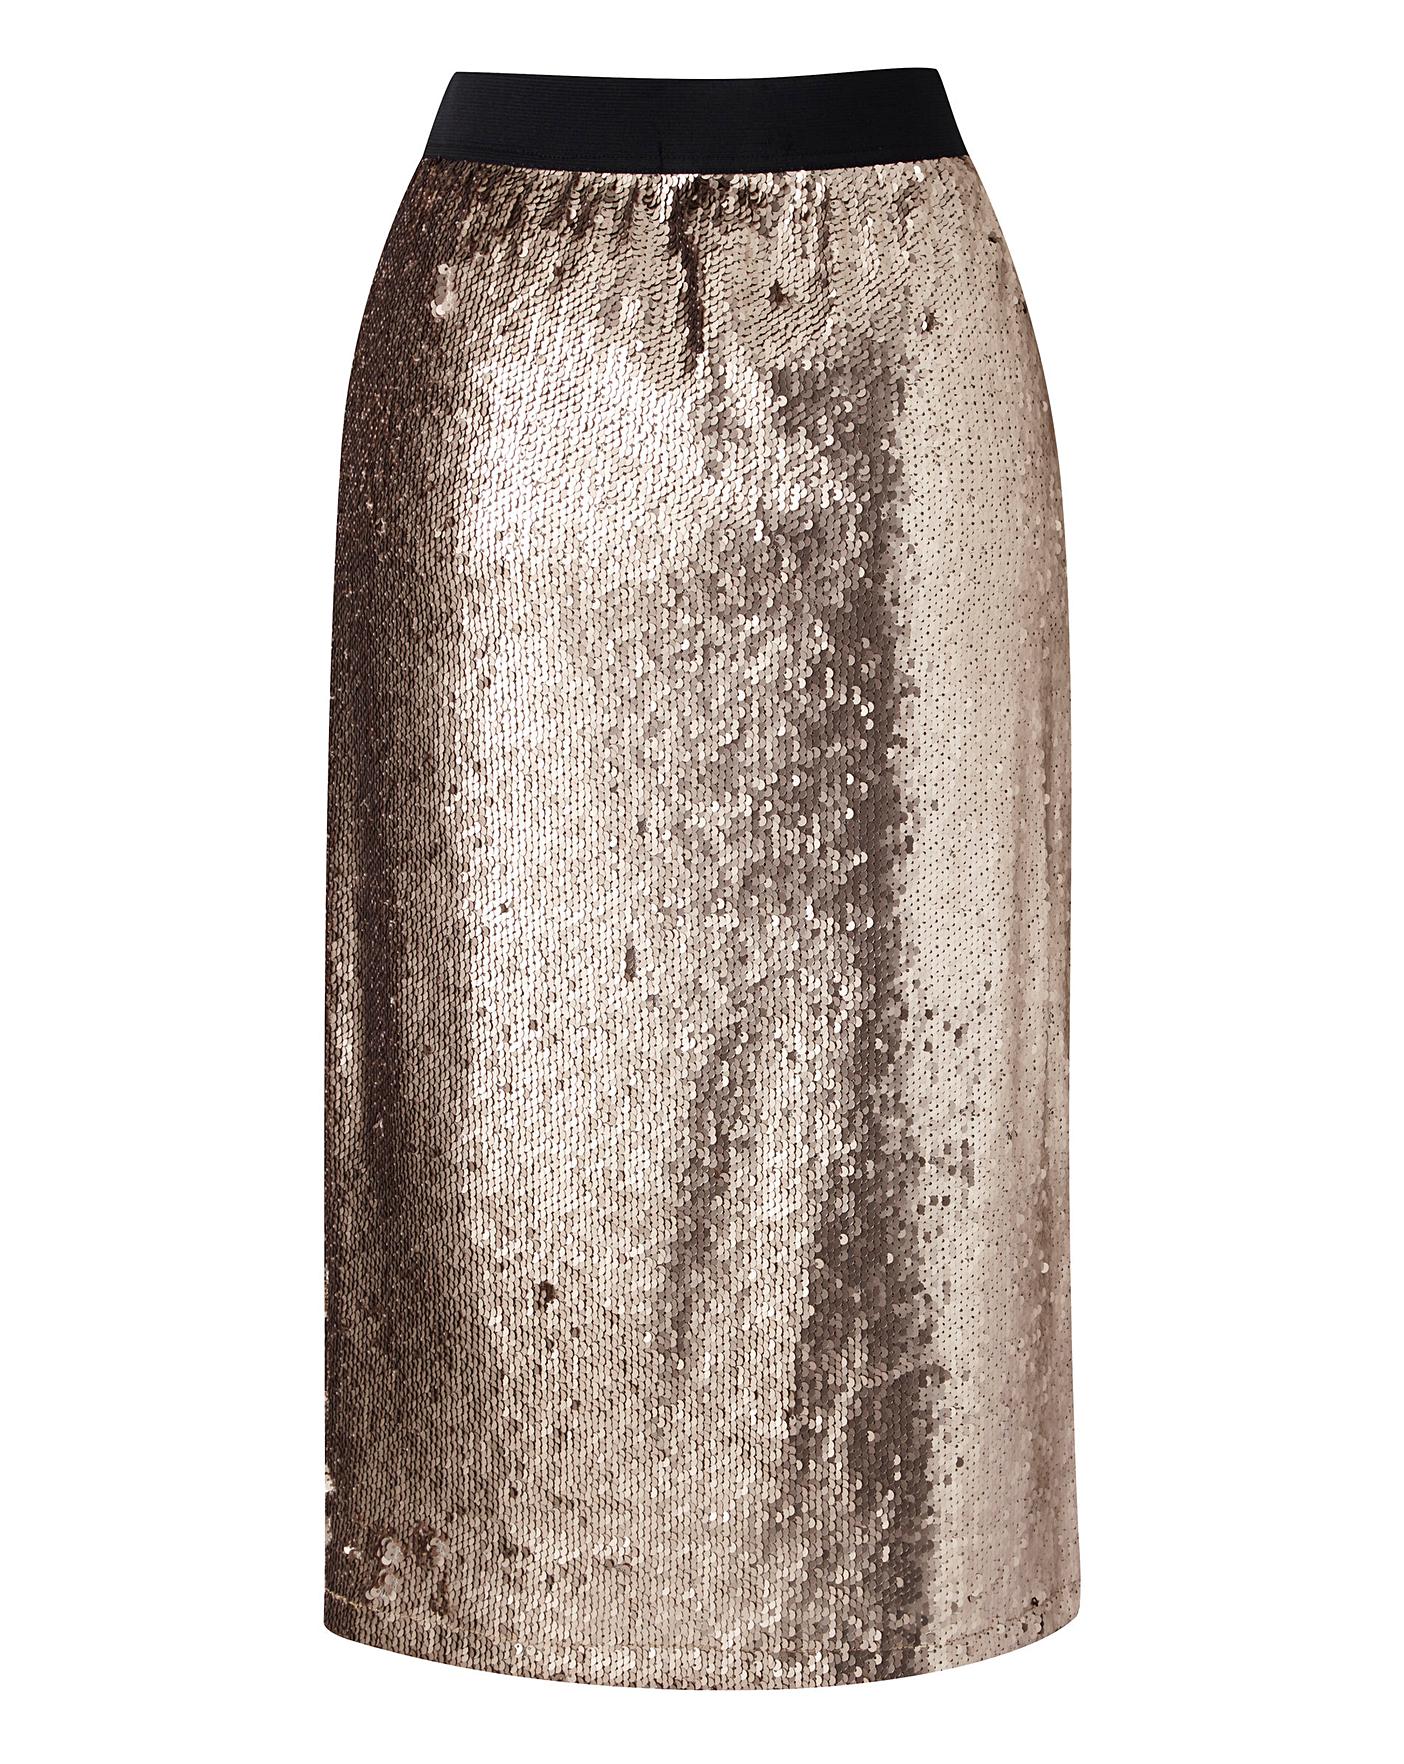 Sequinned Pencil Skirt | J D Williams